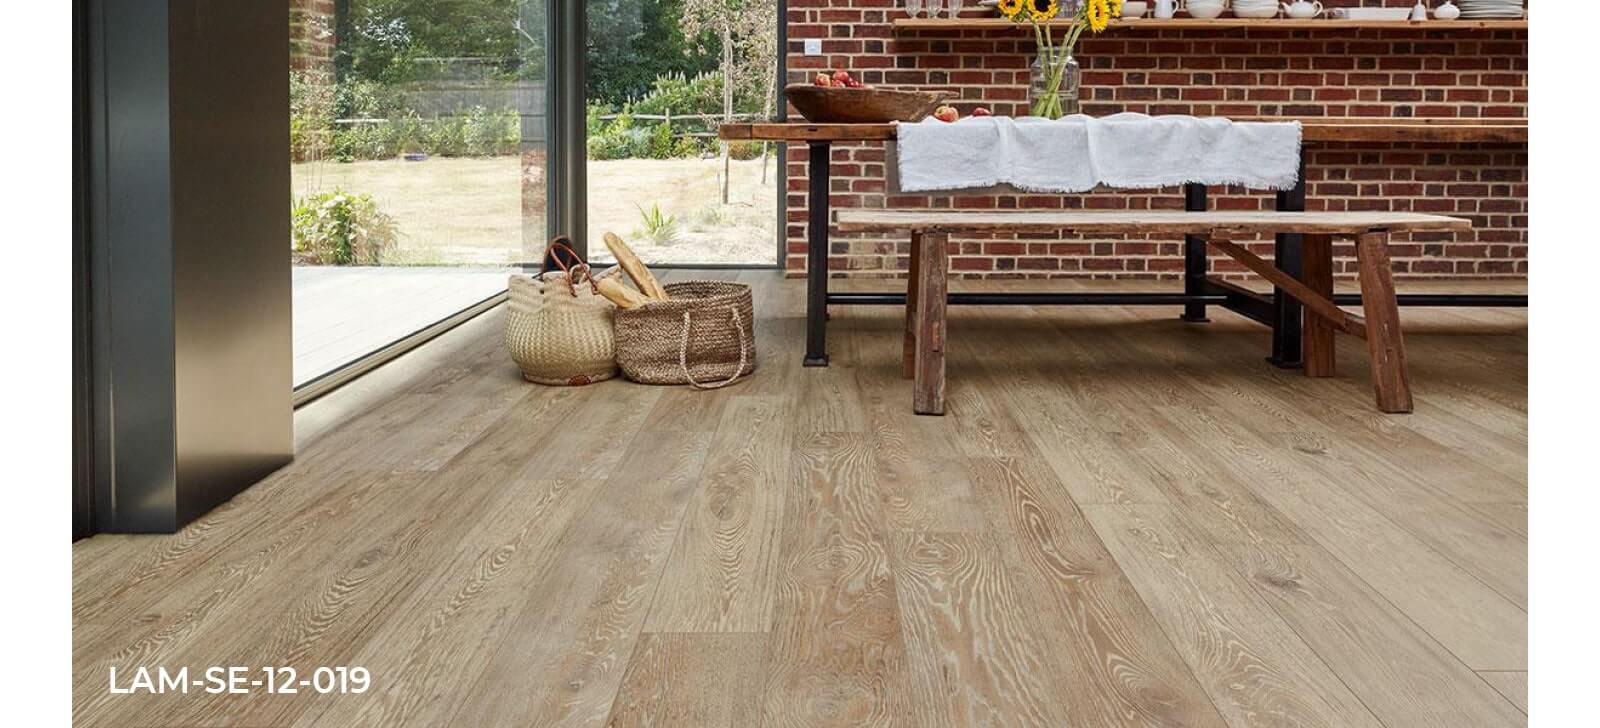 Series Wood Professional Lion Oak laminate flooring dining room roomset